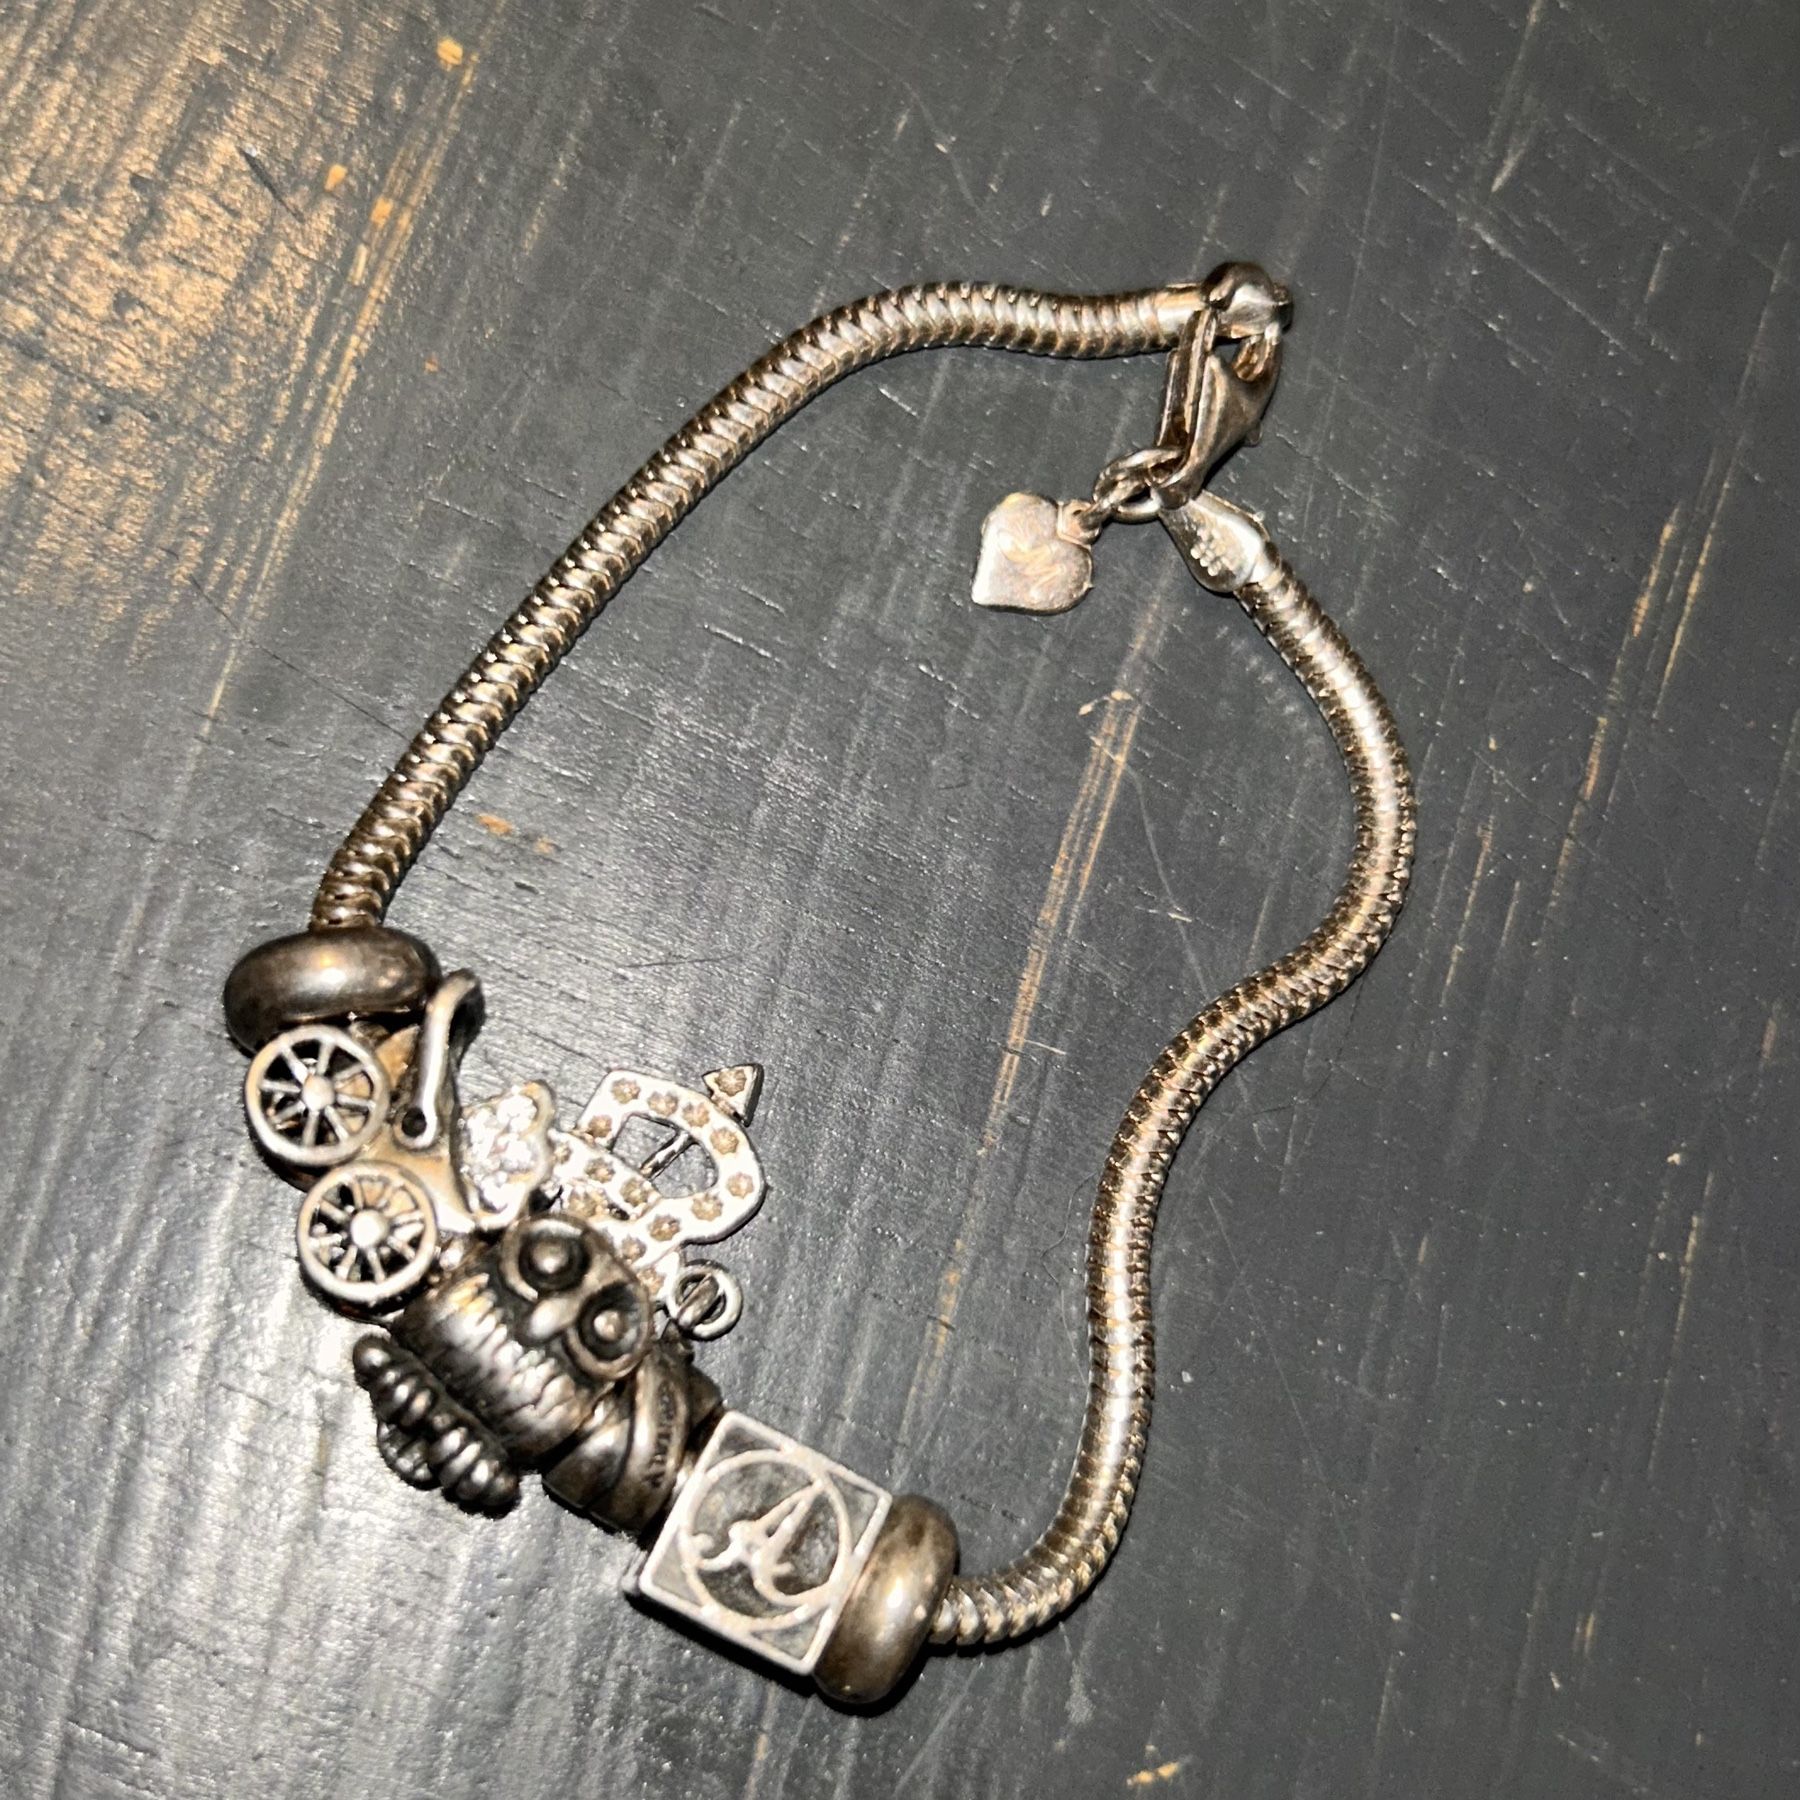 Authentic Pandora Bracelet And Charms 